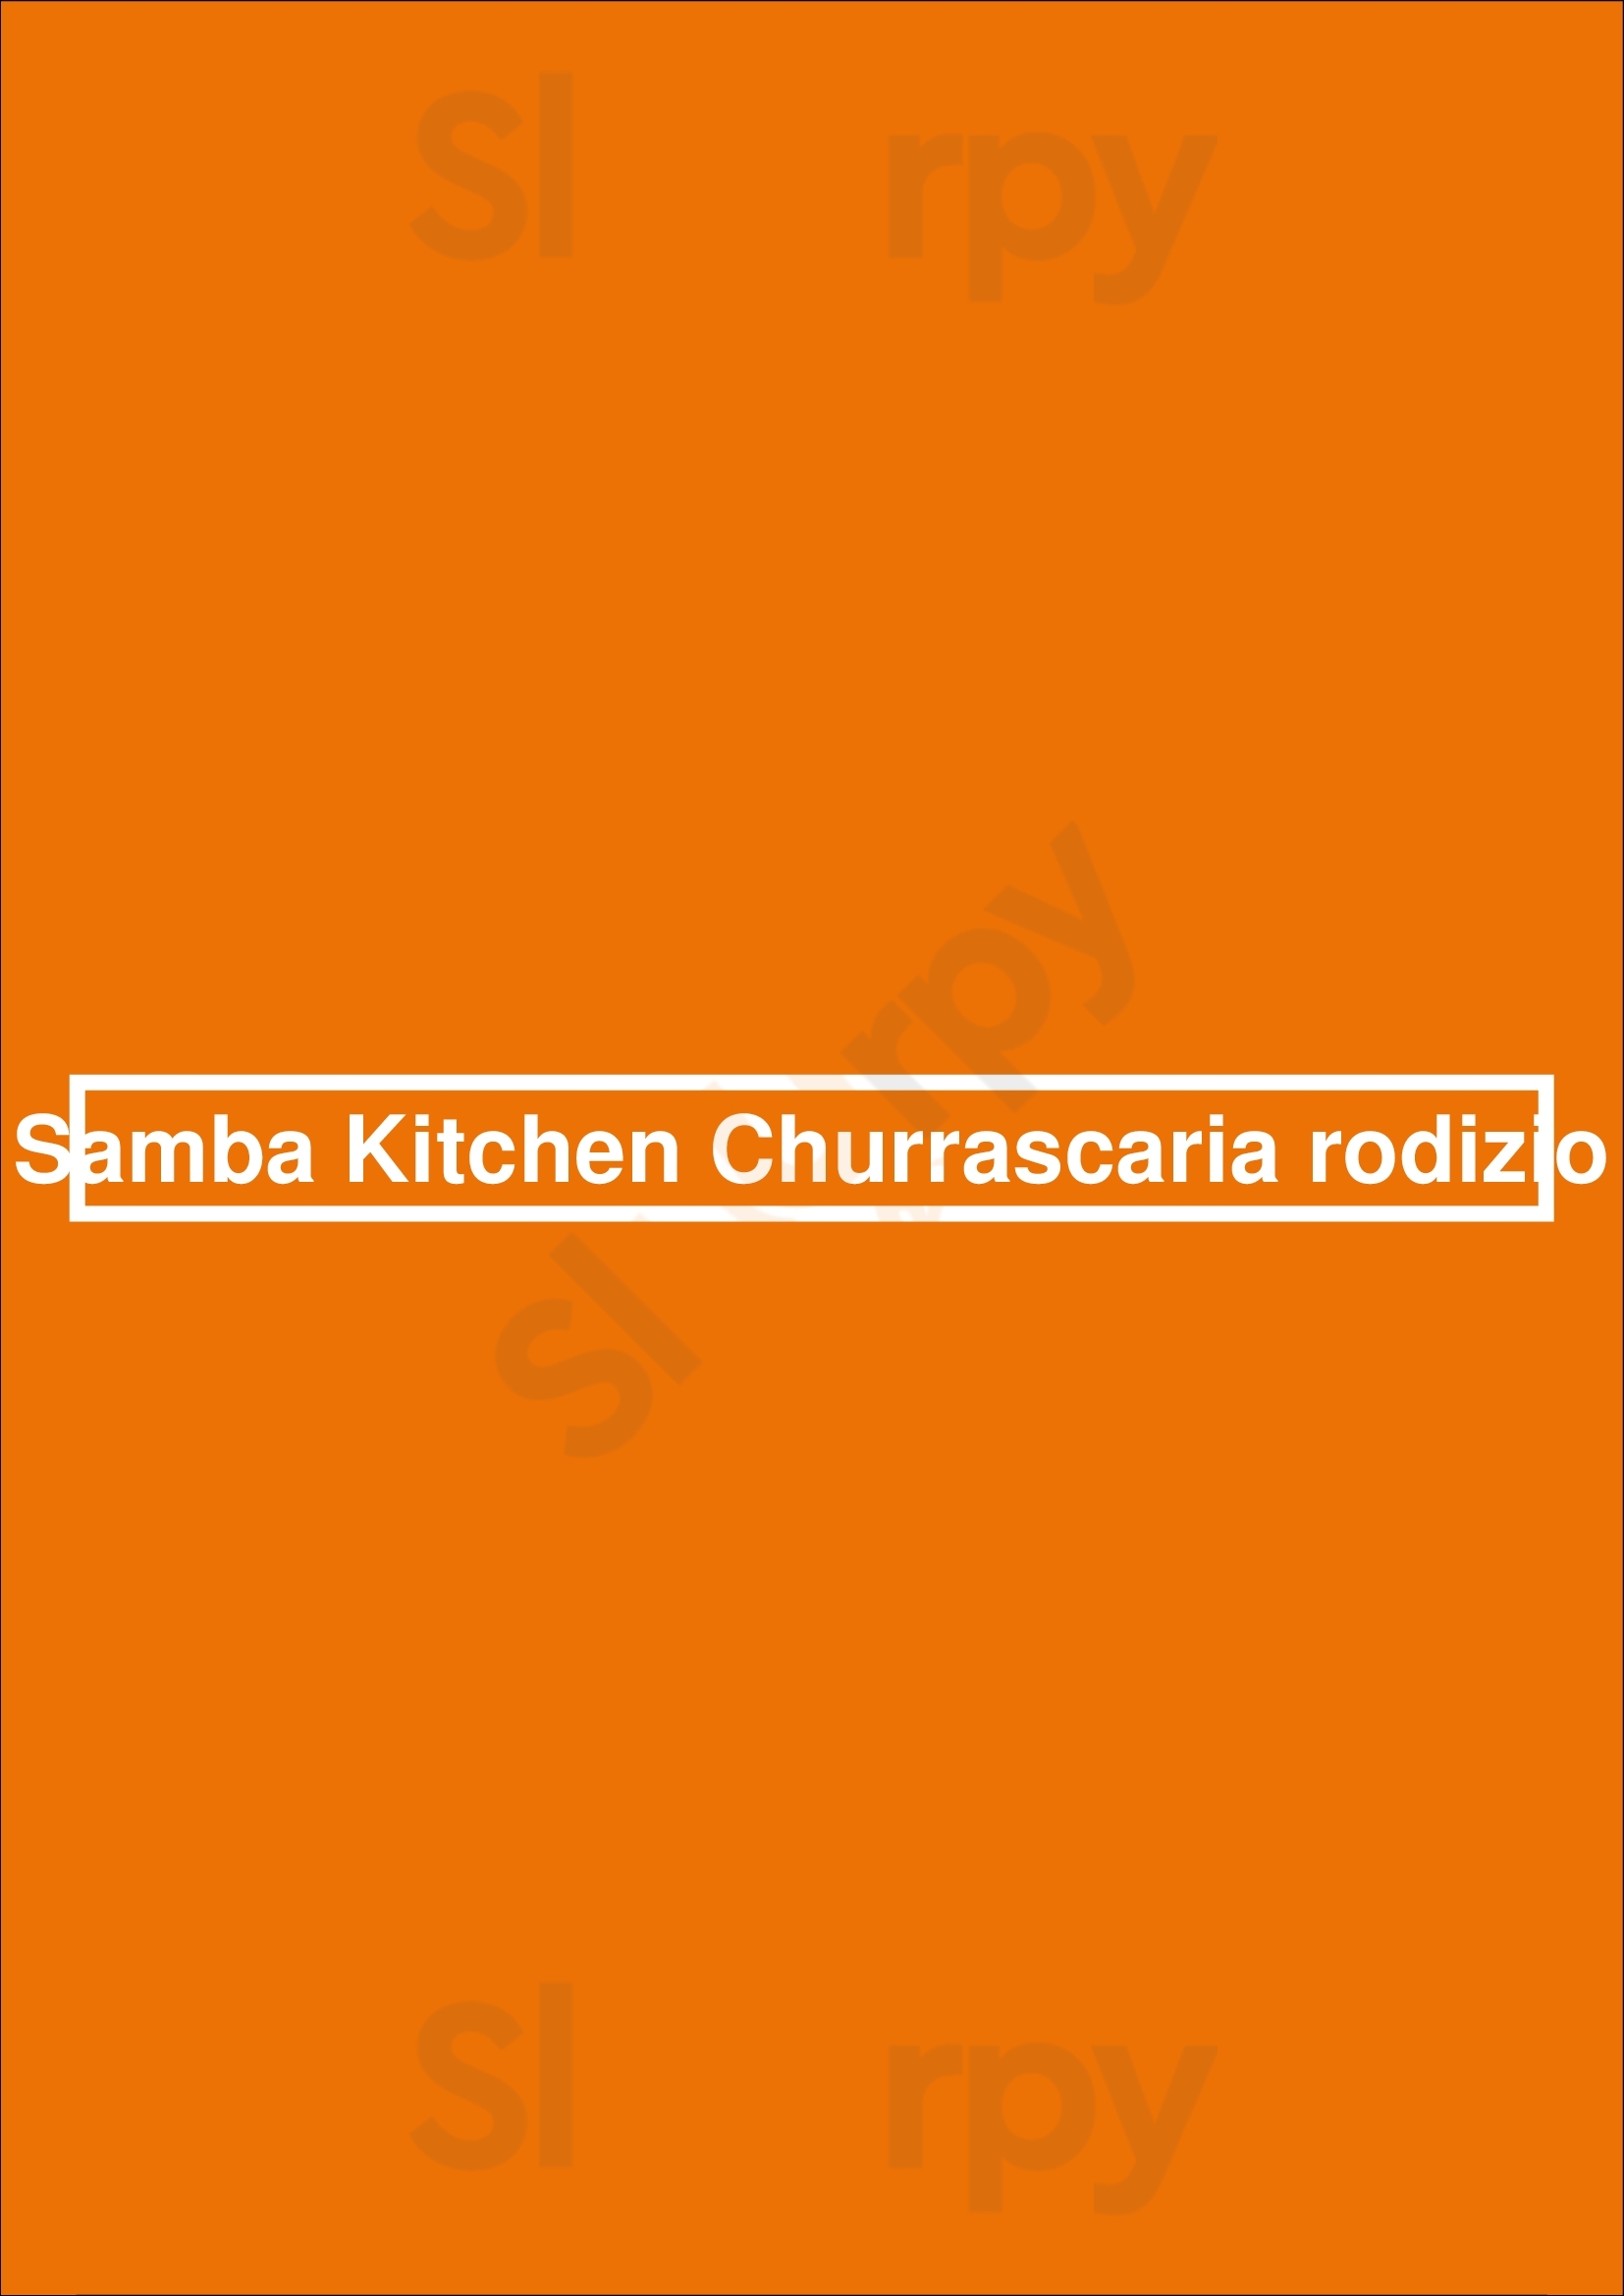 Samba Kitchen Churrascaria Rodizio Amsterdam Menu - 1